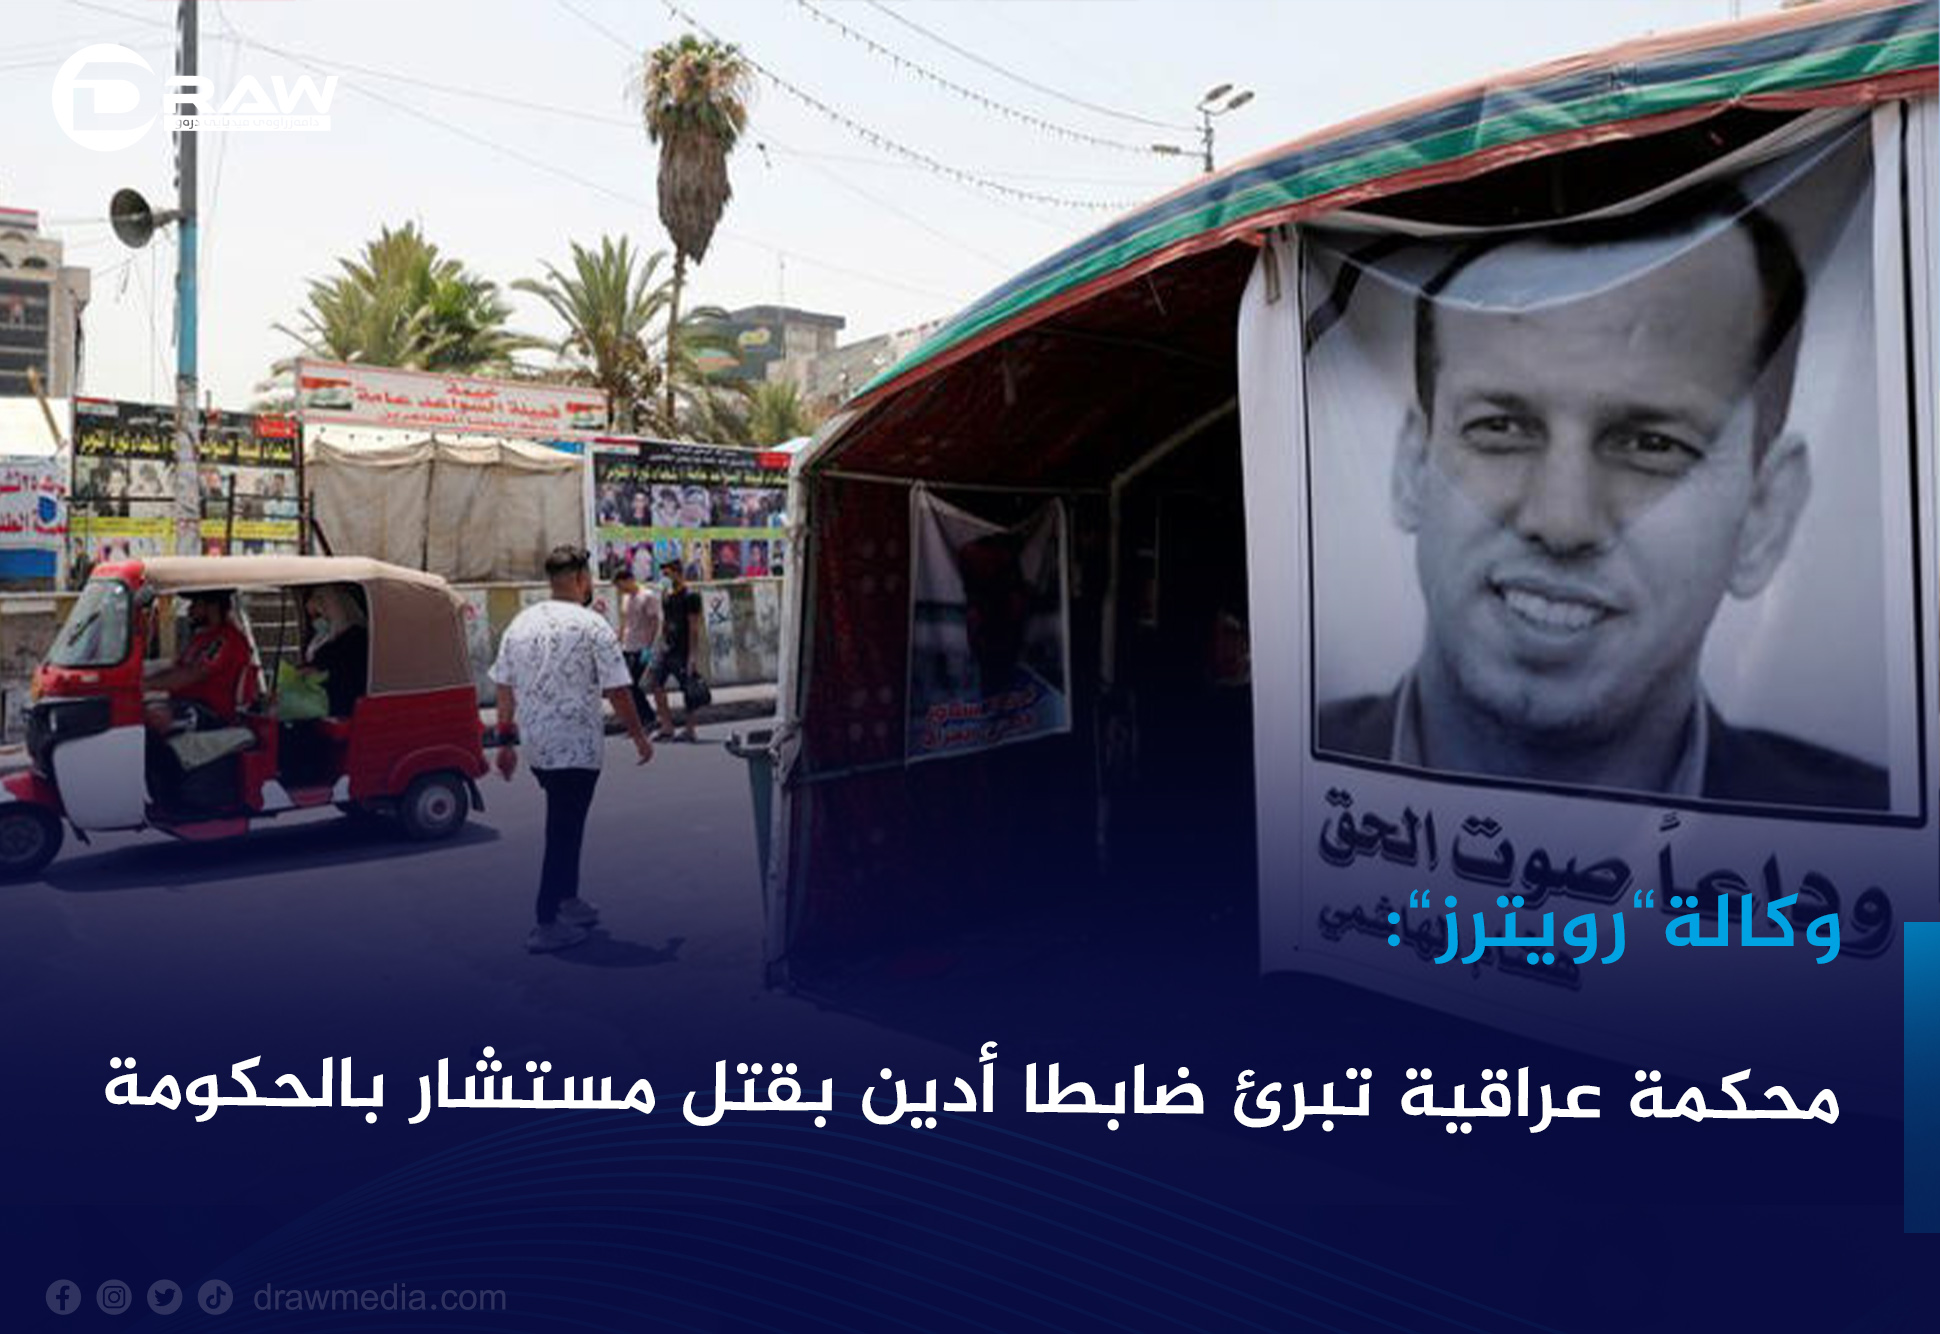 DrawMedia.net /  وكالة "رويترز": محكمة عراقية تبرئ ضابطا أدين بقتل مستشار بالحكومة